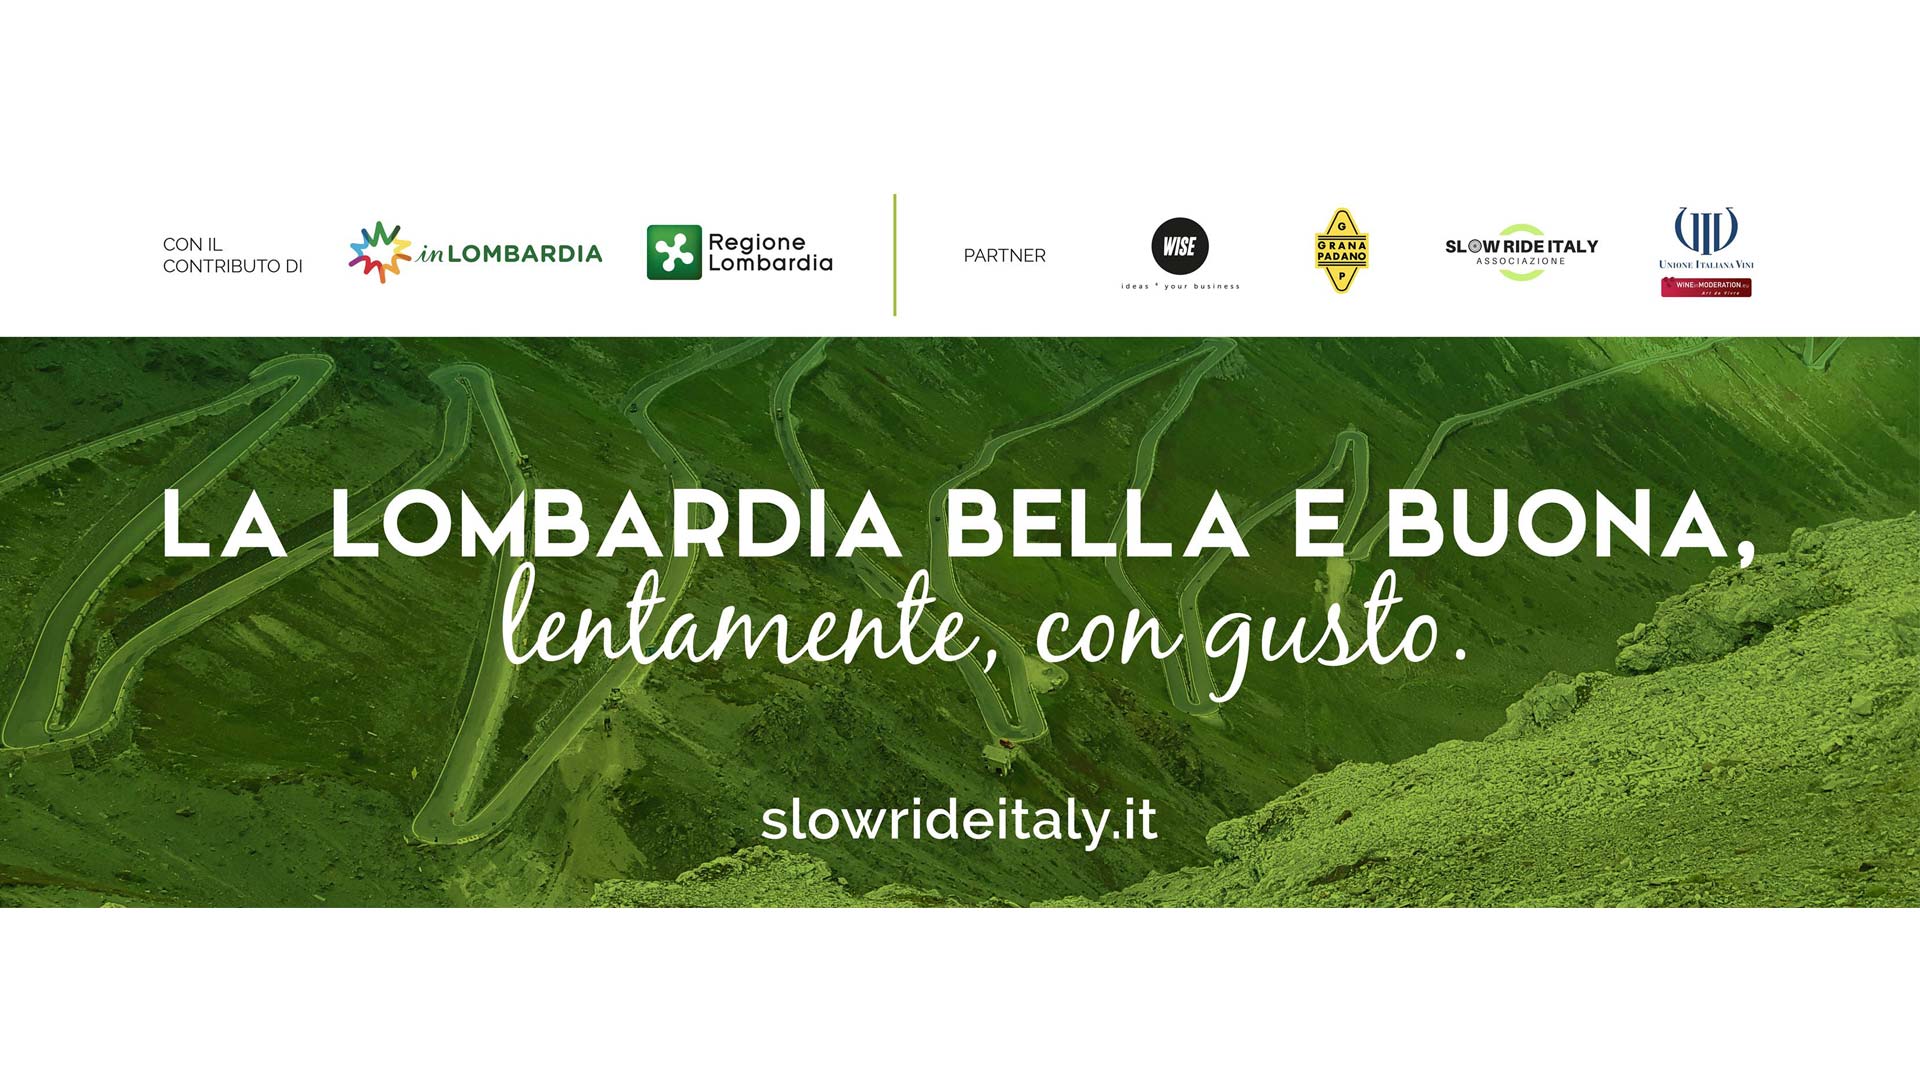 slow ride italy motoreetto presenta moto turismo enogastronomico in lombardia